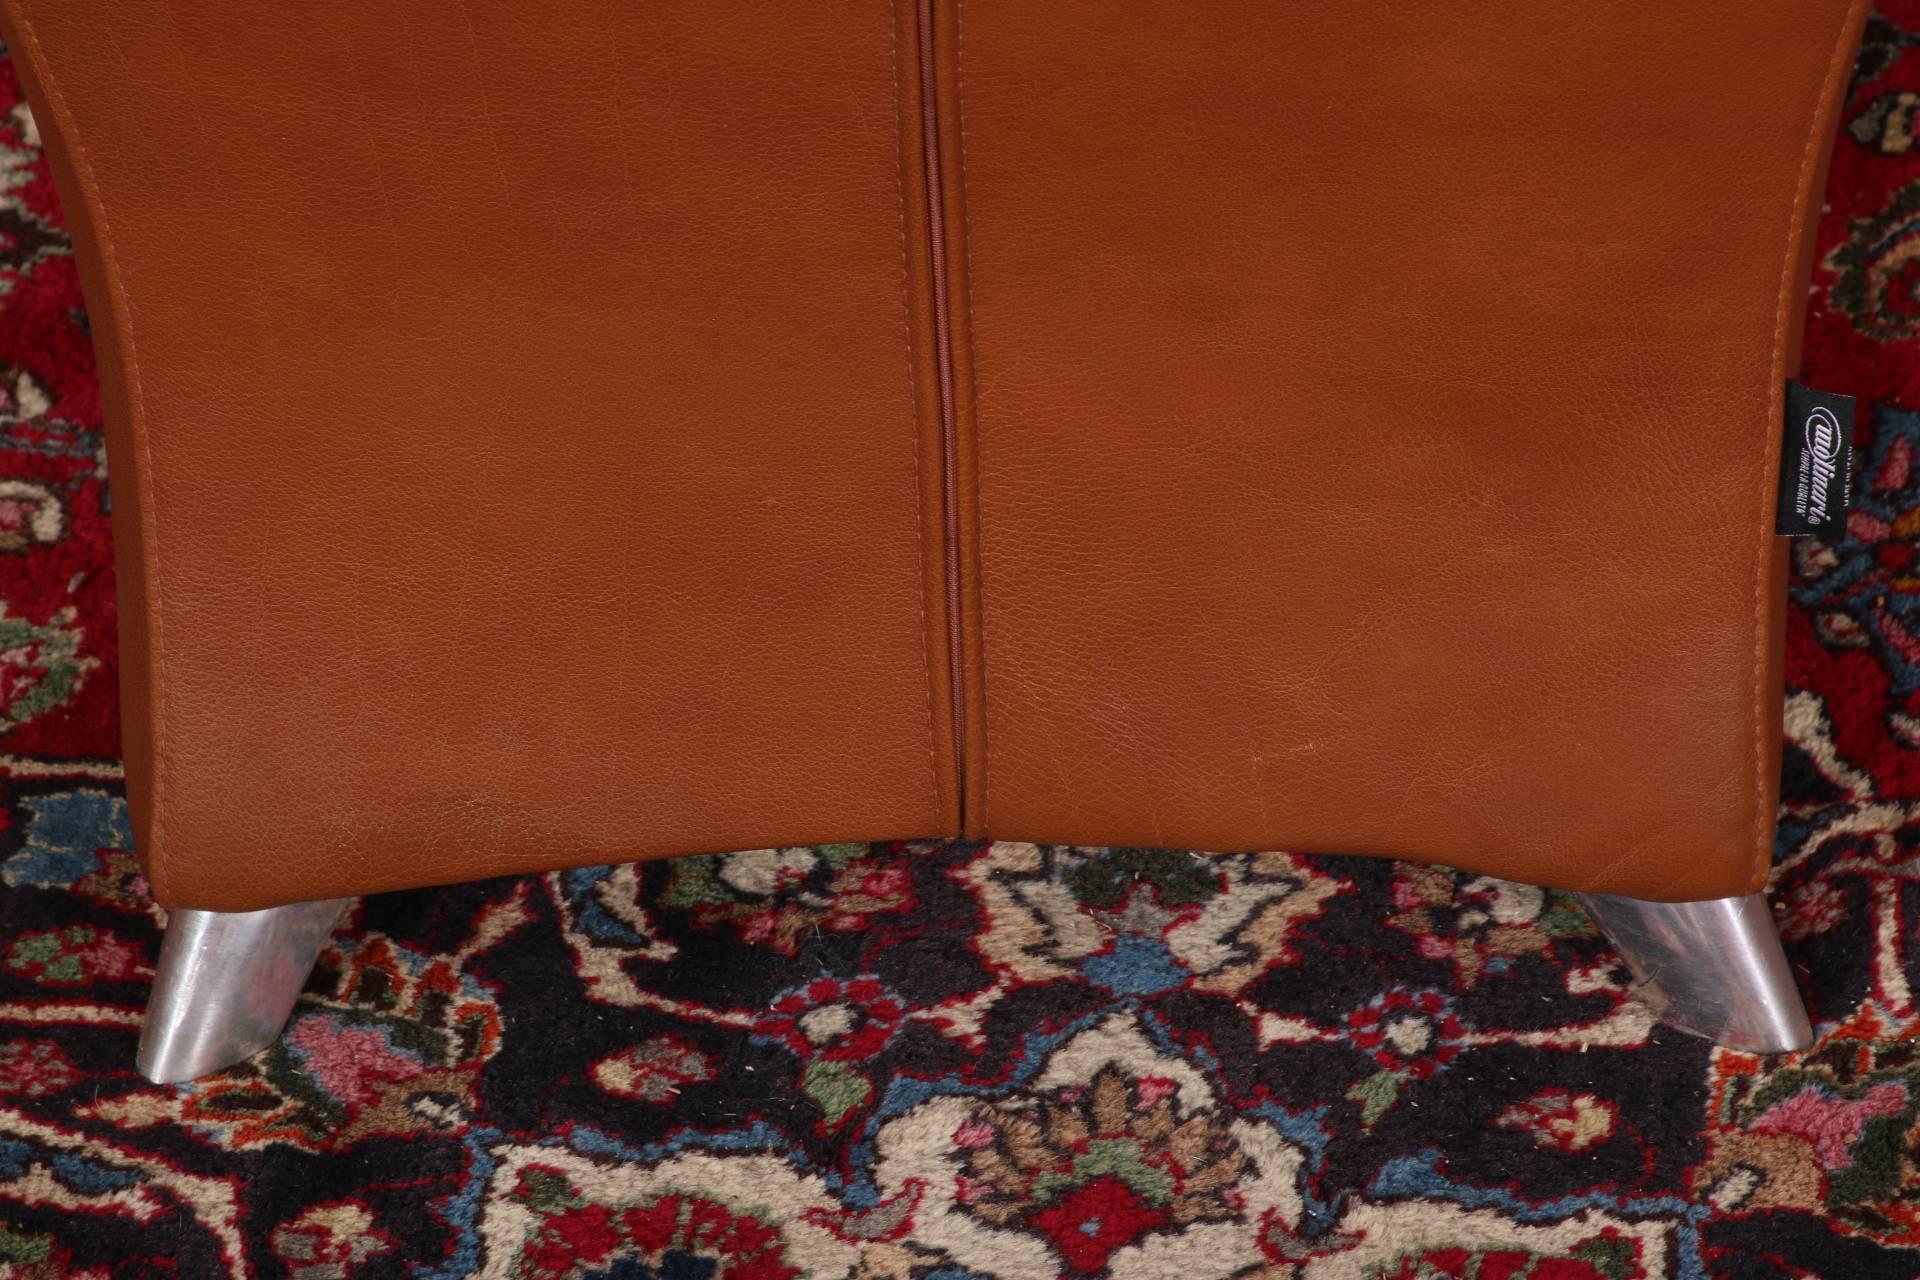 20th Century Vintage Molinari Tan Leather Armchair